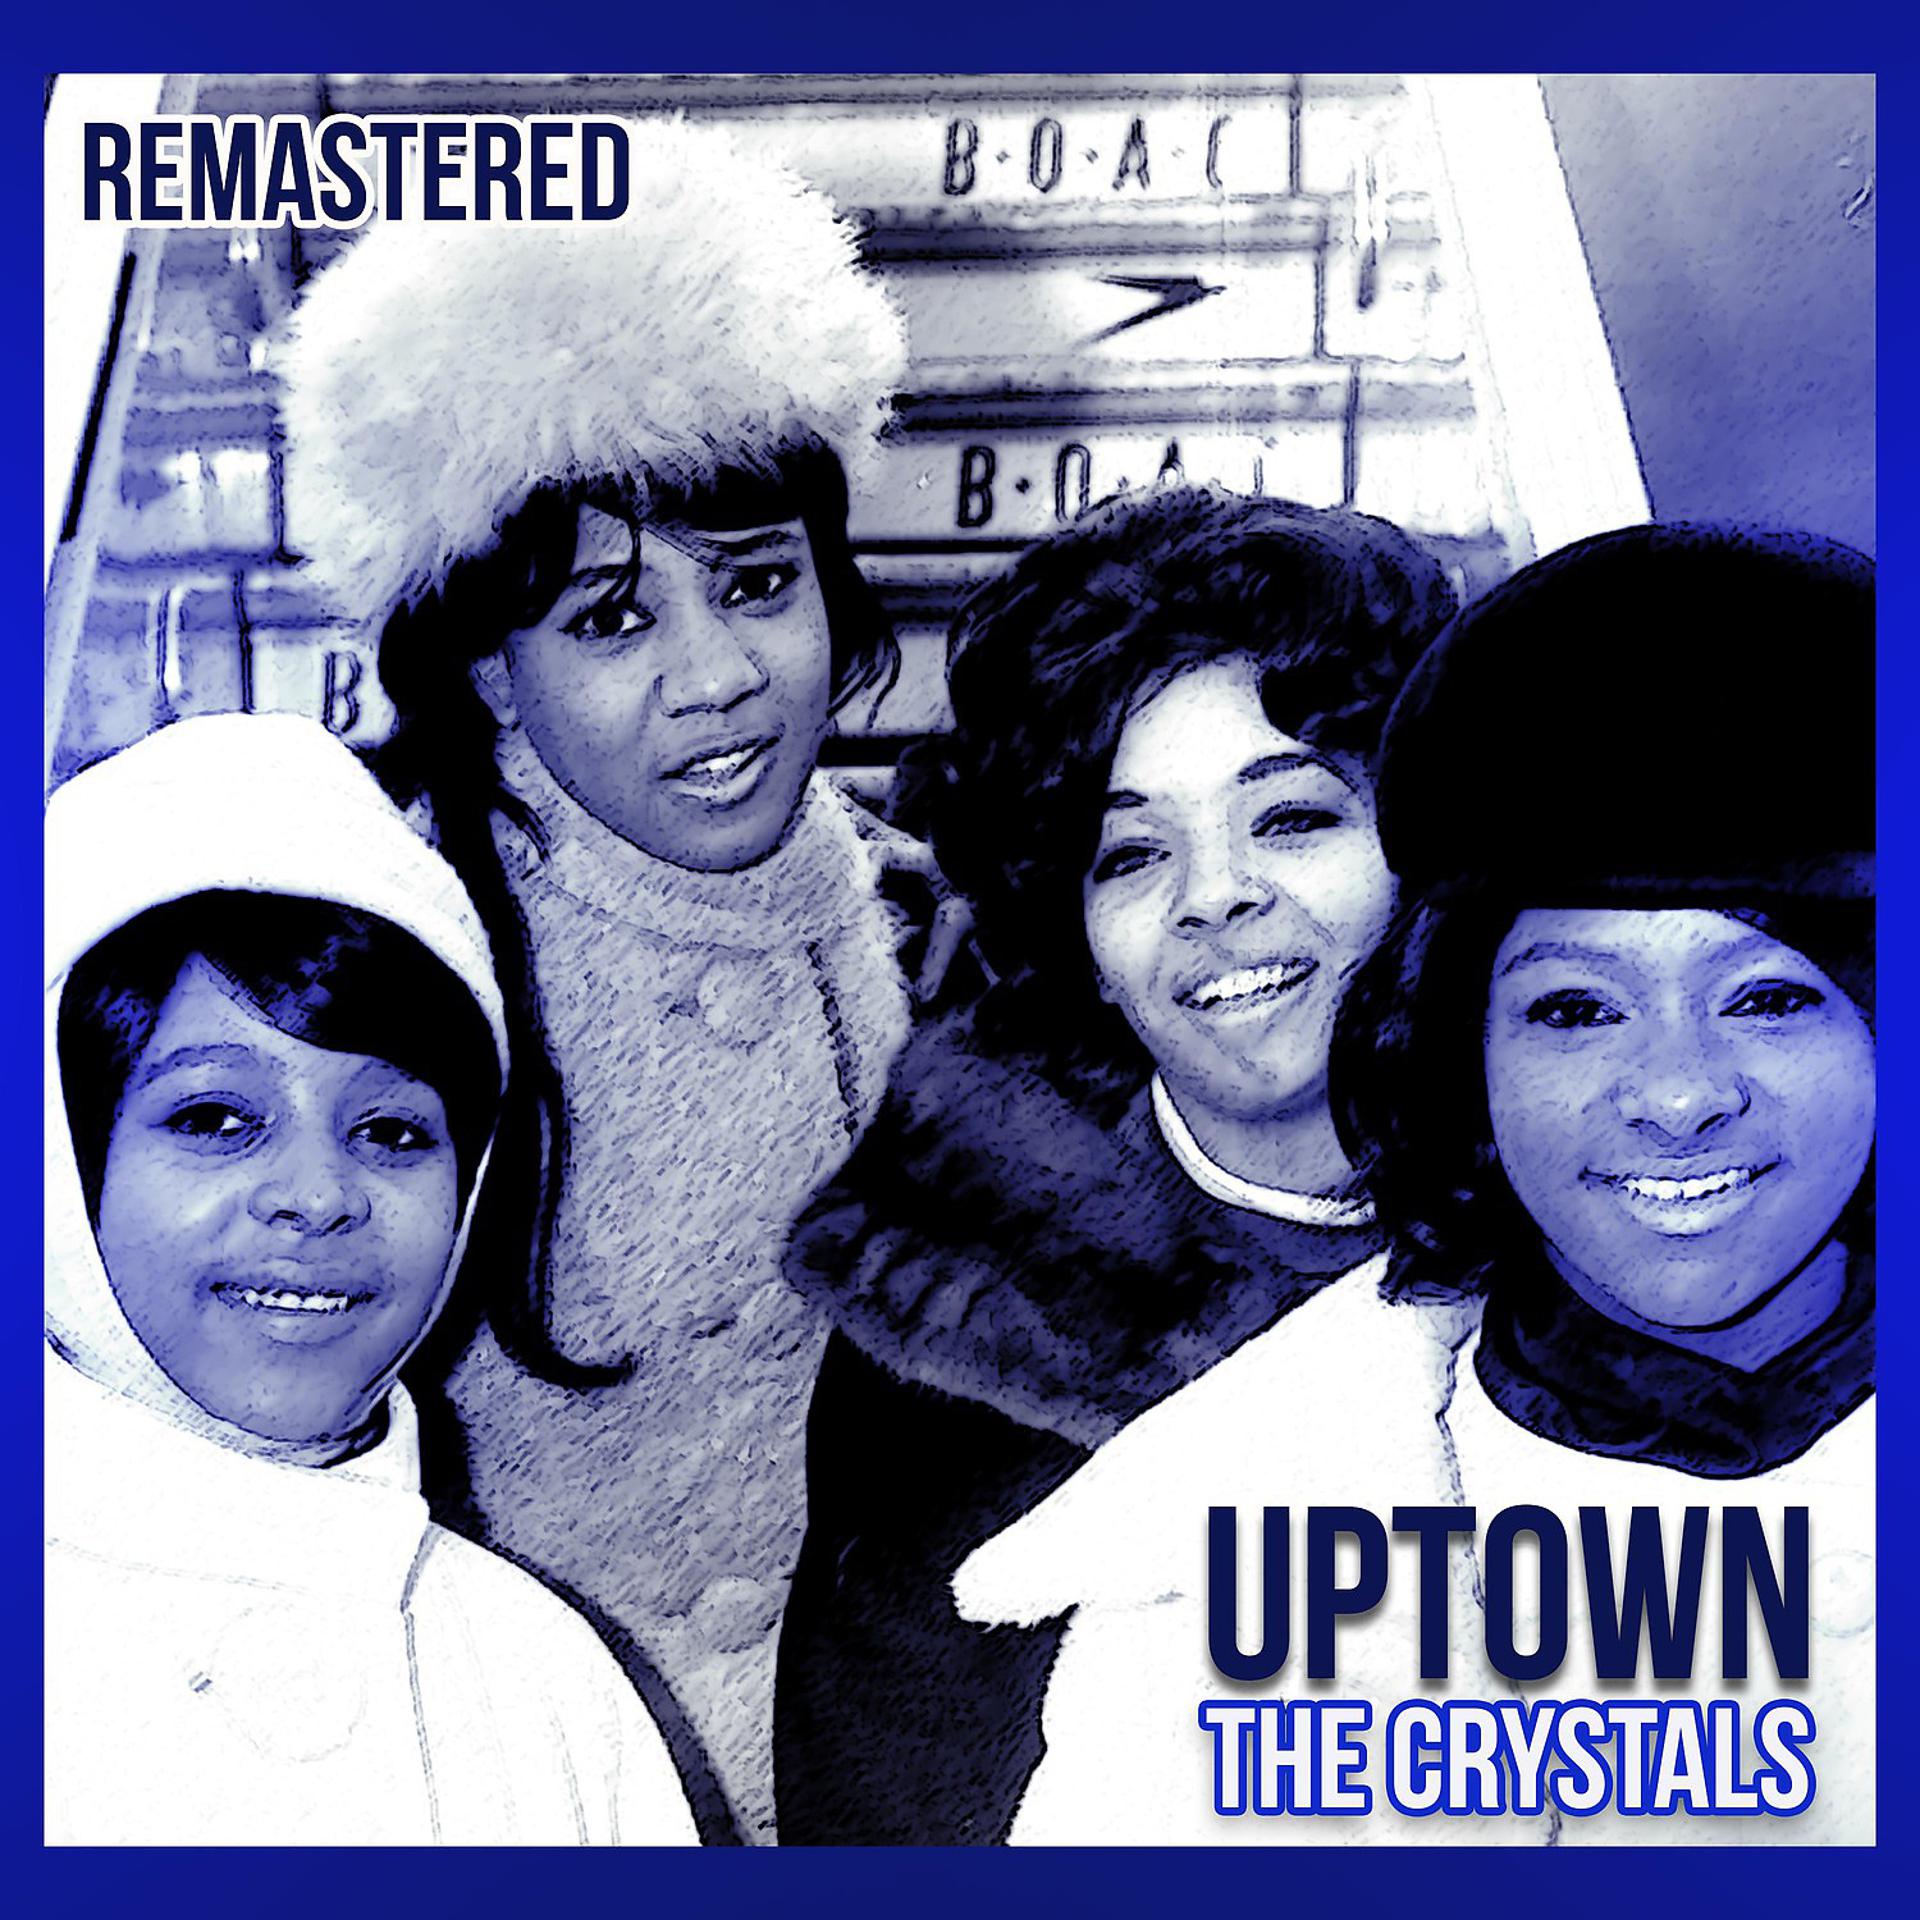 Группа the Crystals. Crystals Uptown. Crystals песня.